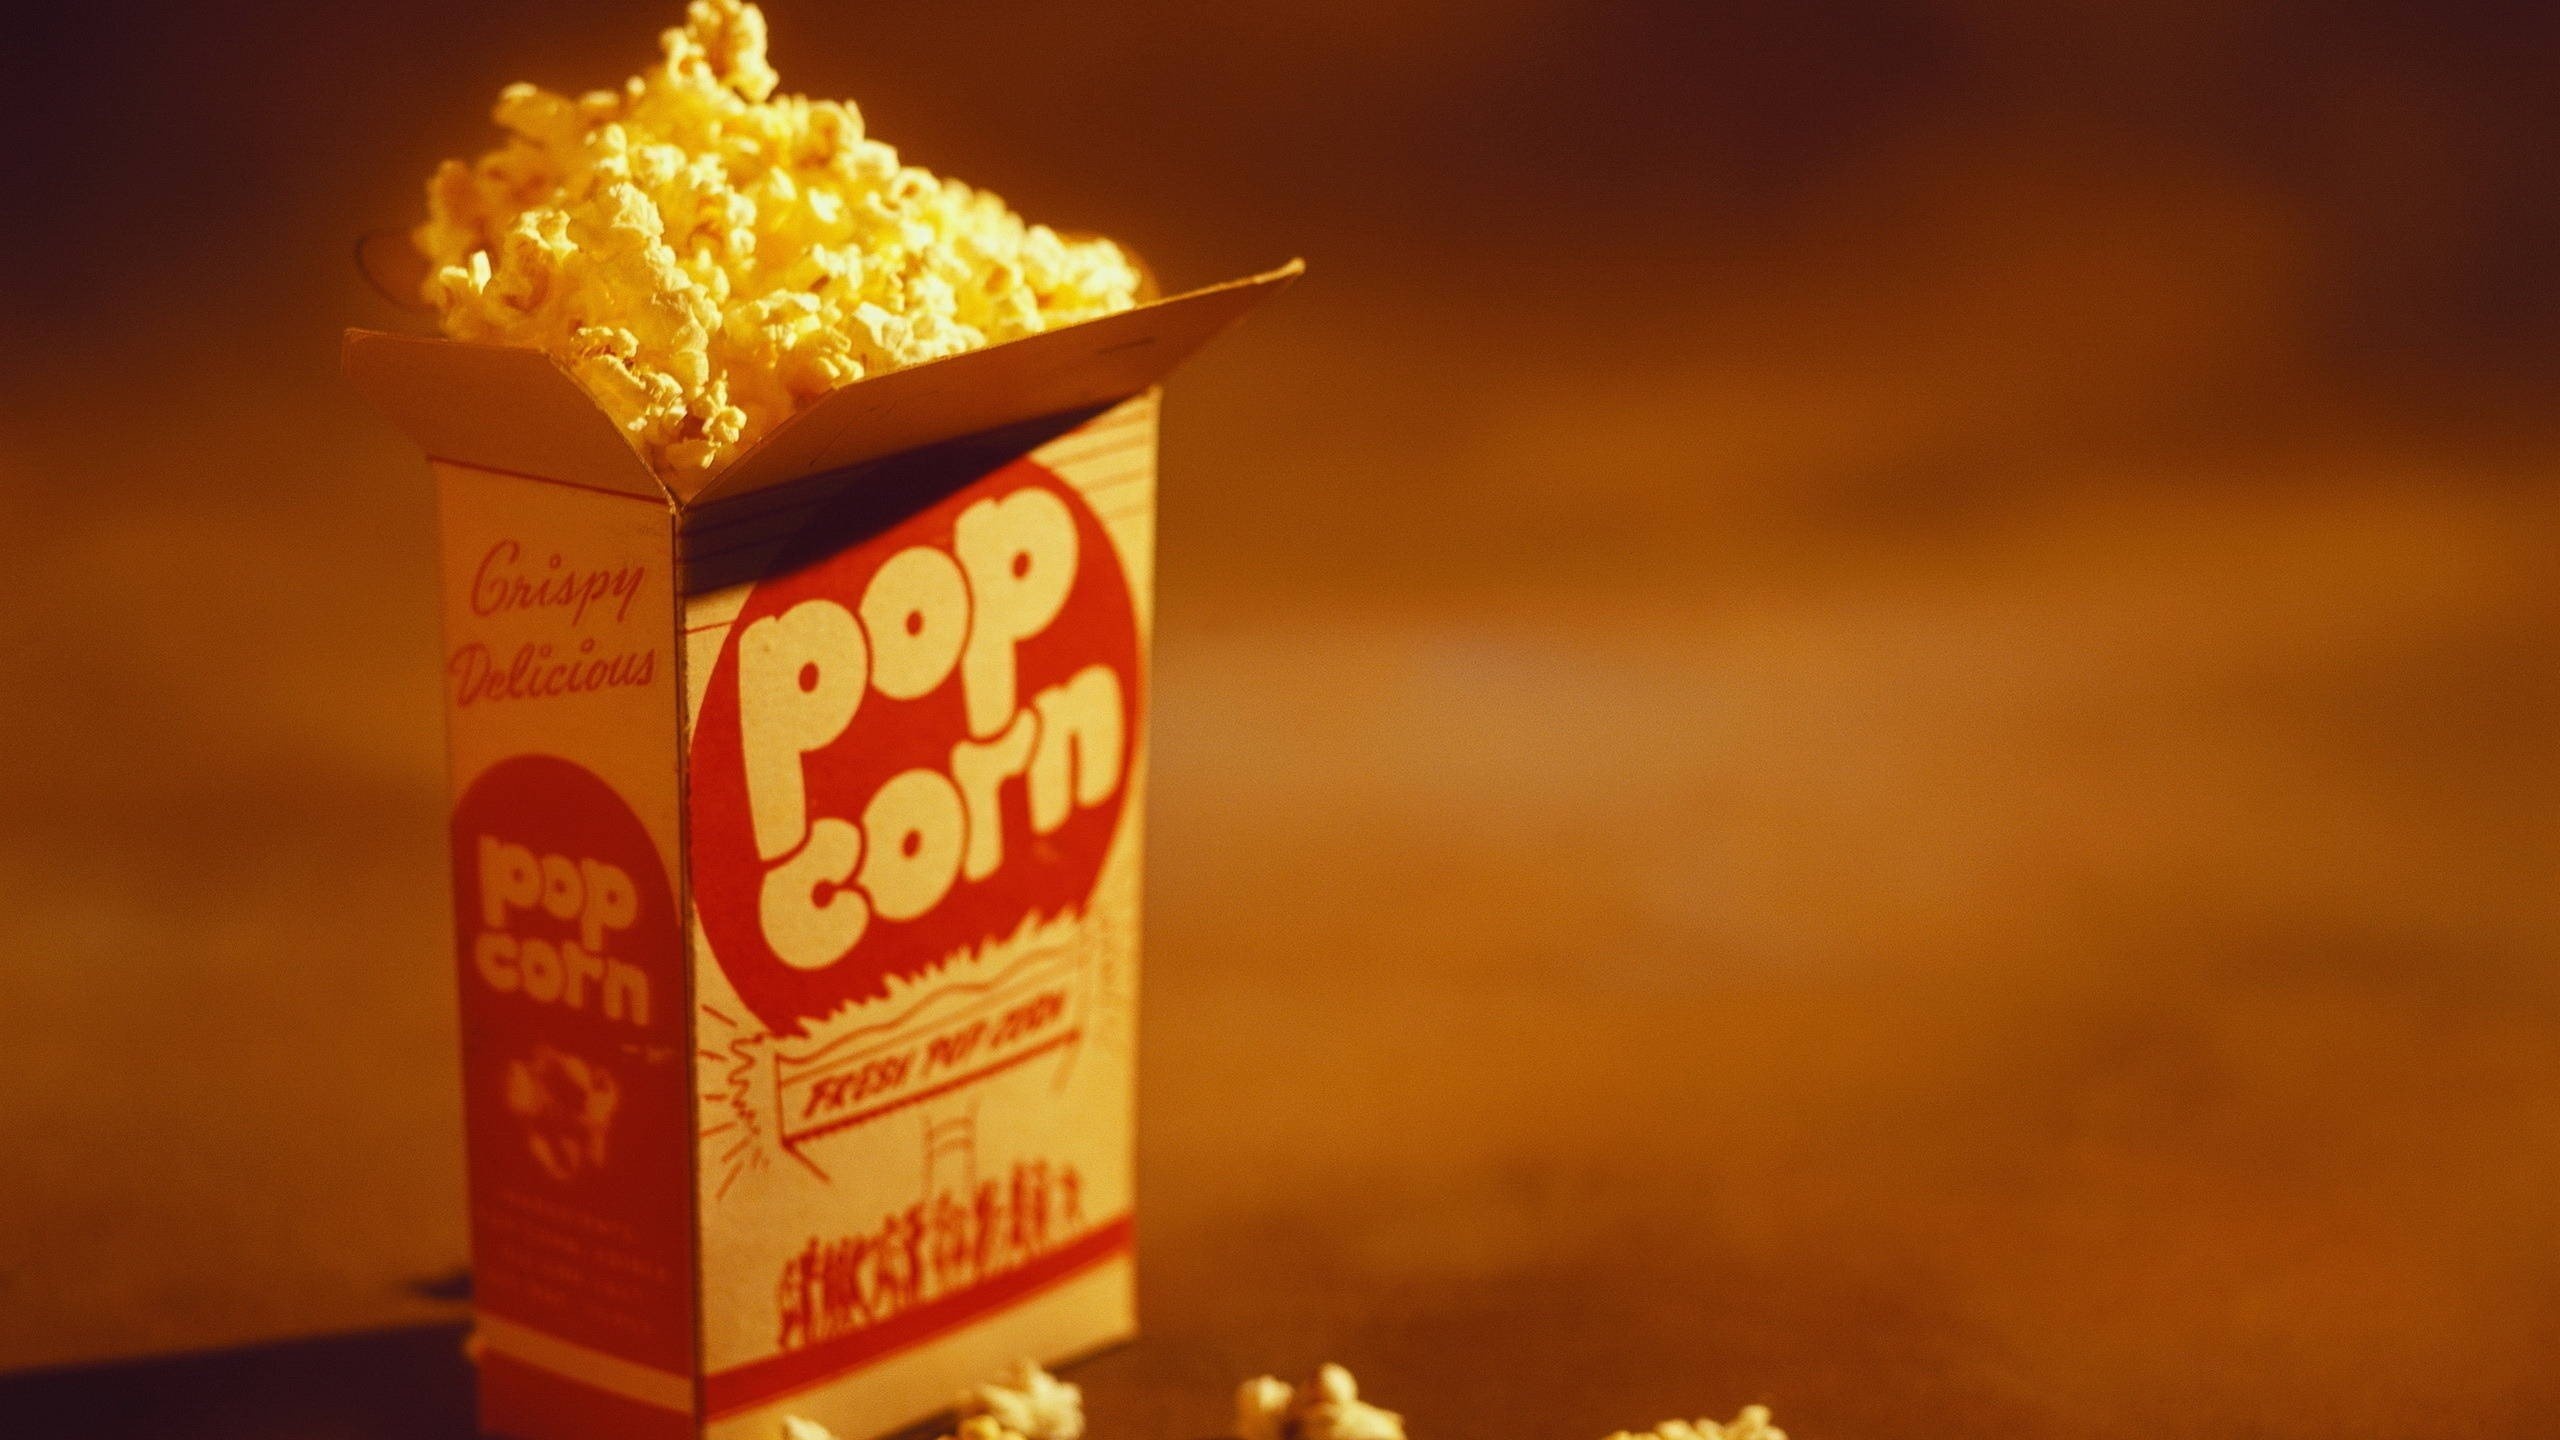 Popcorn indulgence, HD wallpaper, Tempting treat, Movie night delight, 2560x1440 HD Desktop